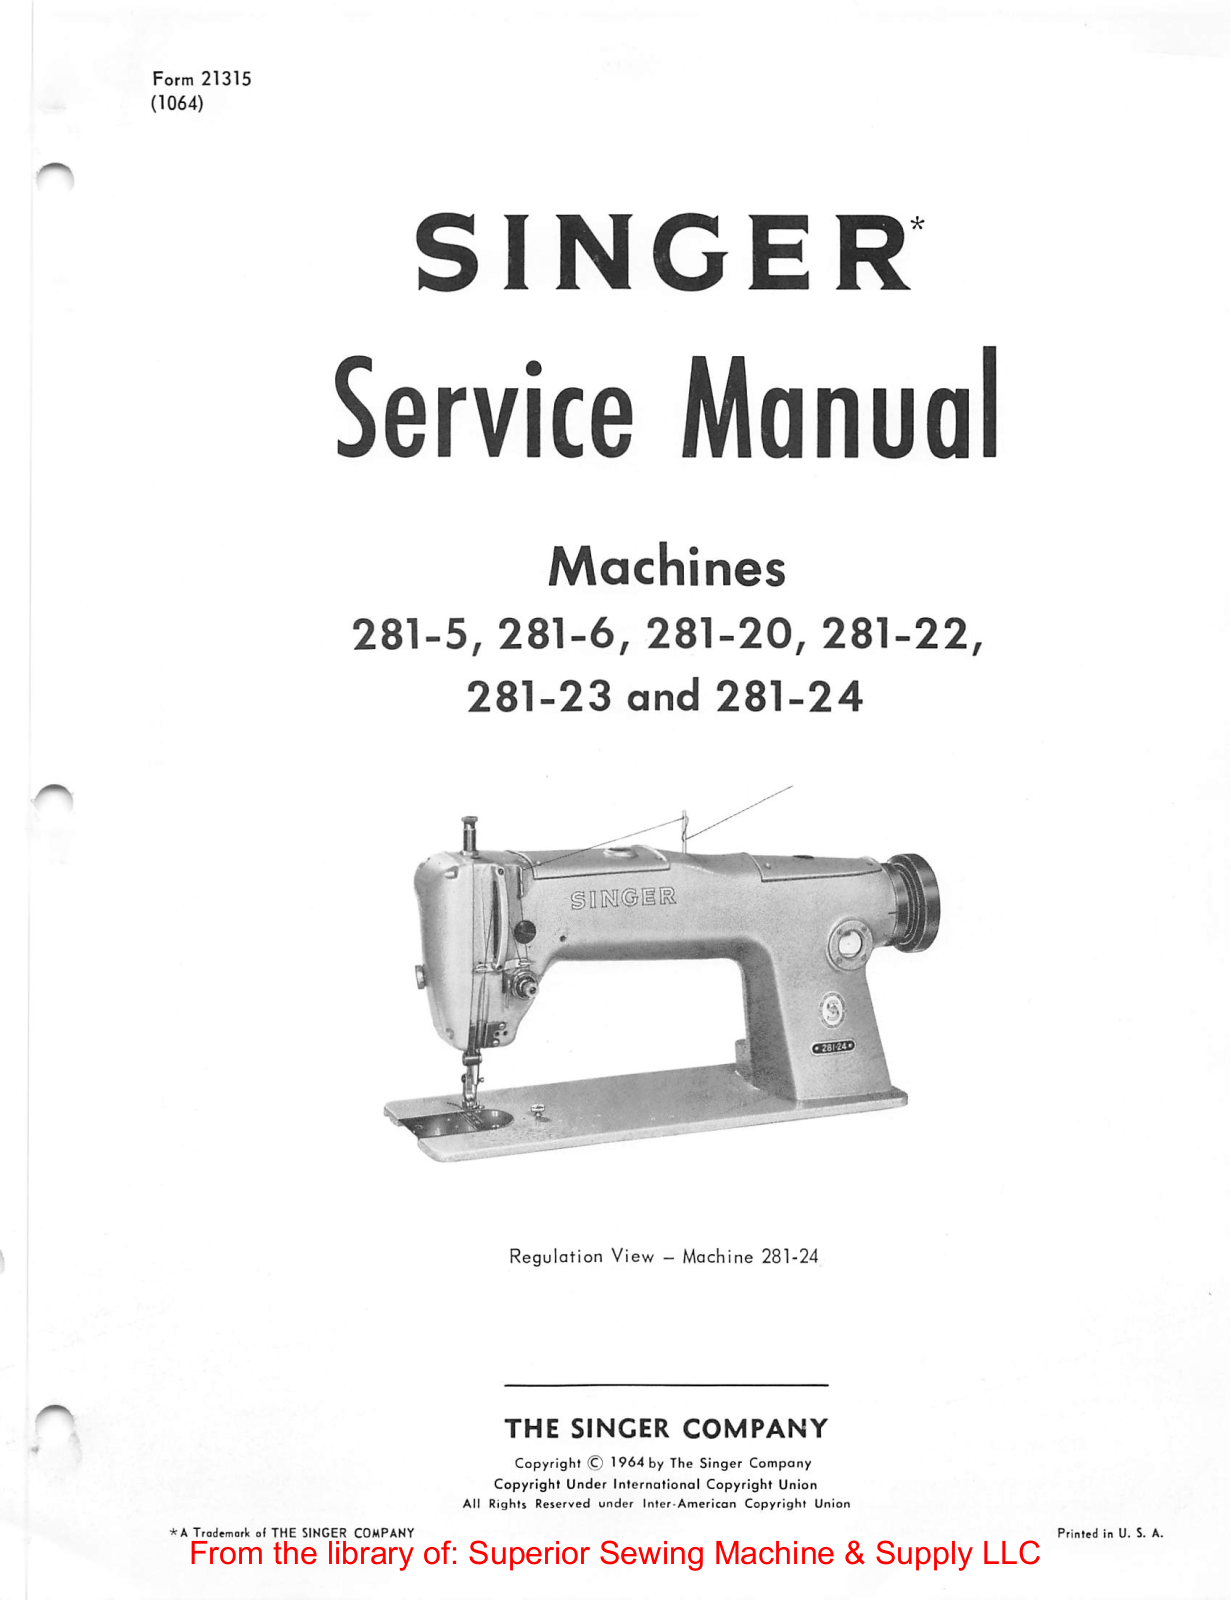 Singer 281-5, 281-6, 281-20, 281-22, 281-23 Service Manual